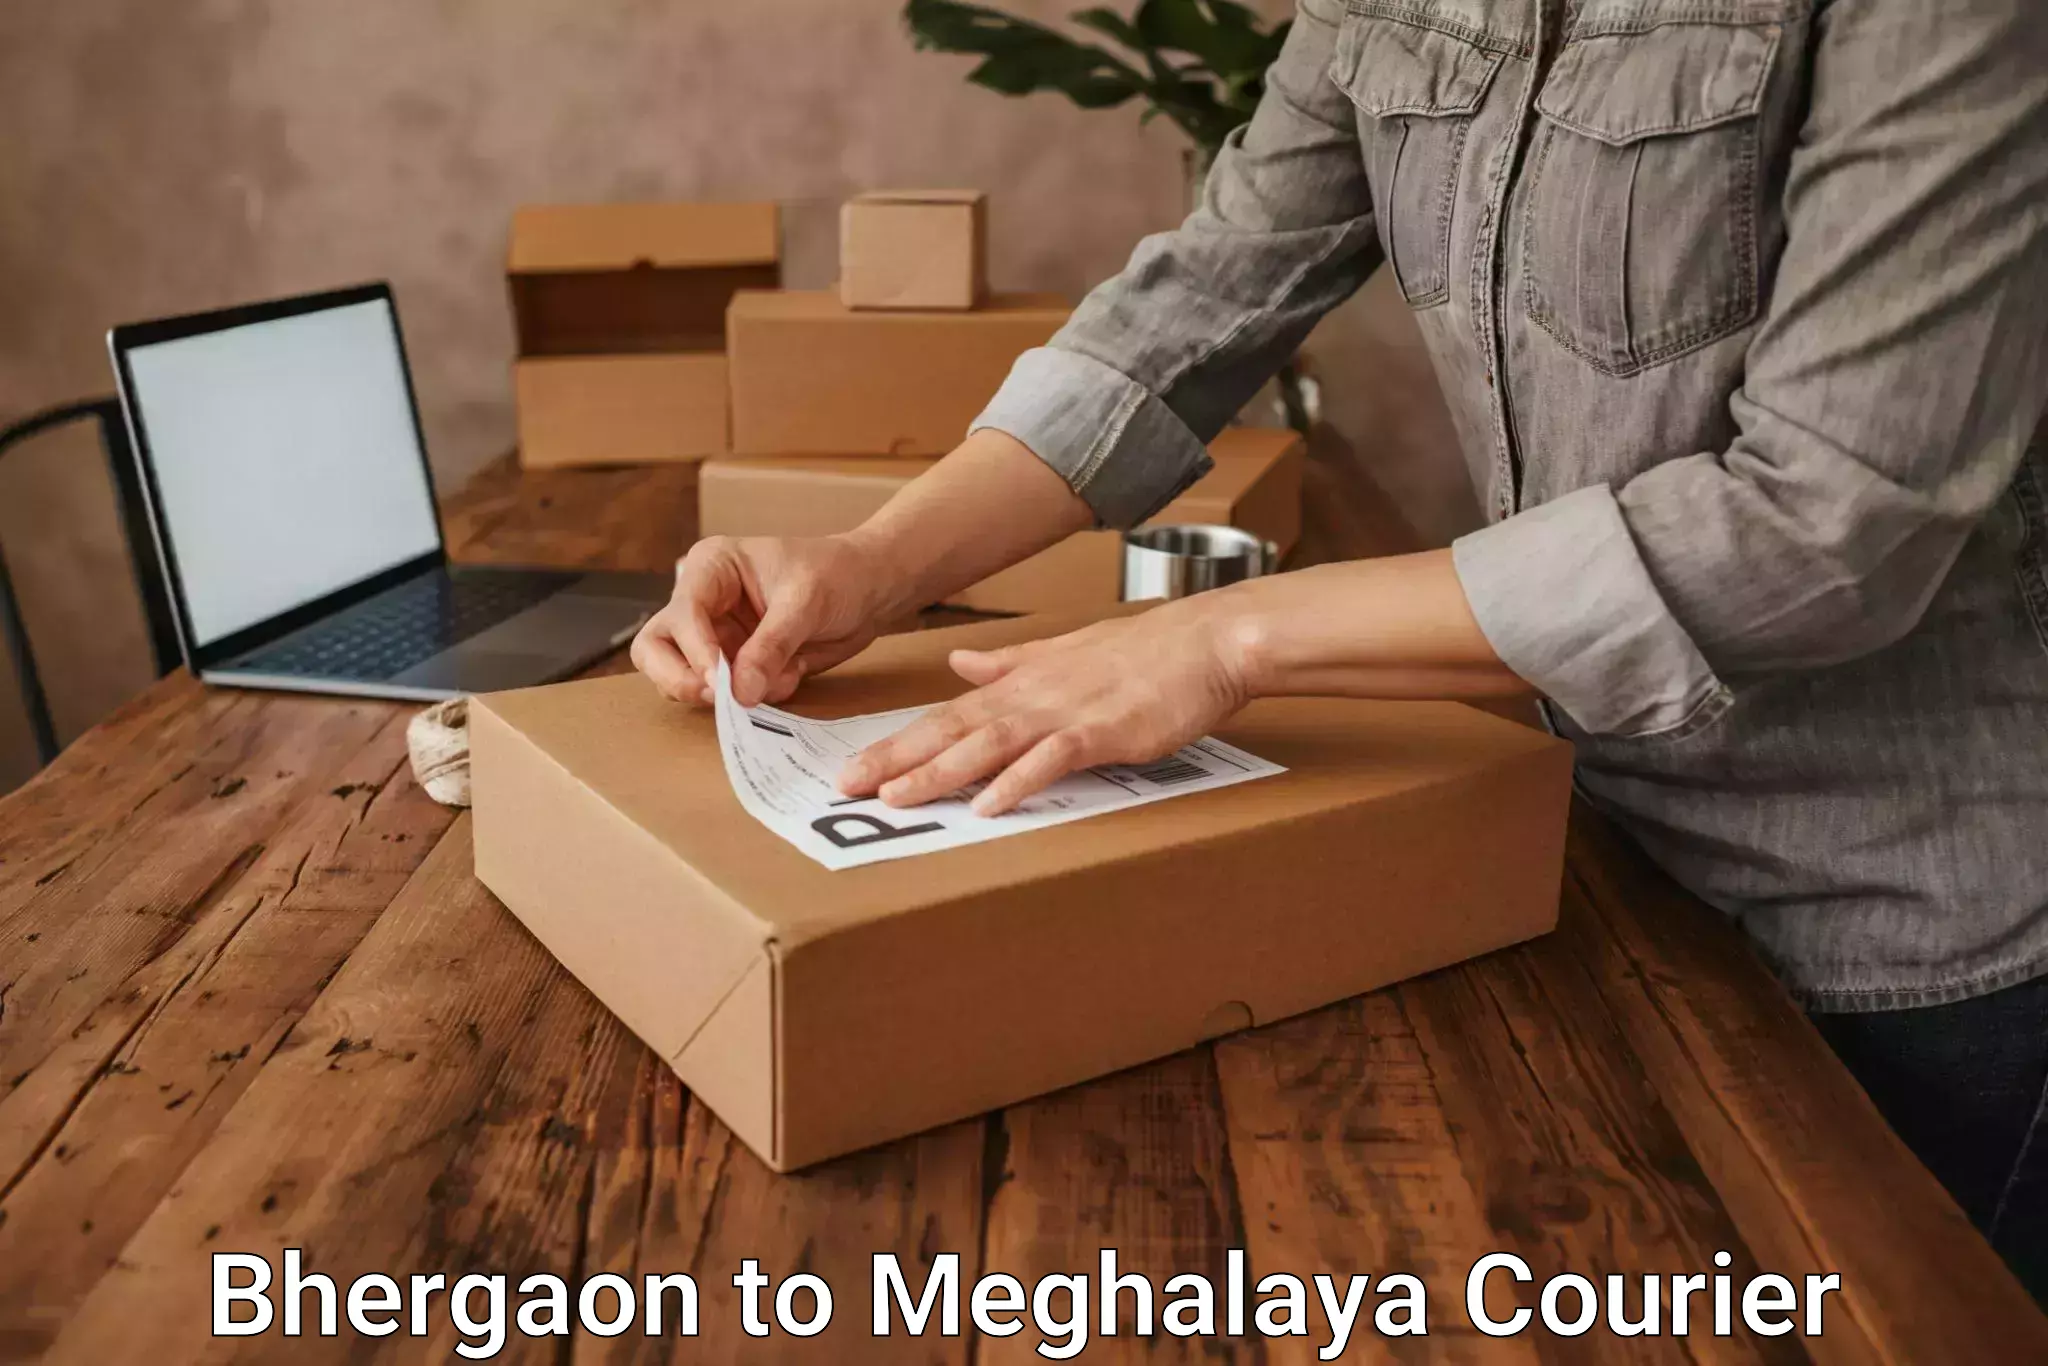 Affordable parcel service Bhergaon to Meghalaya